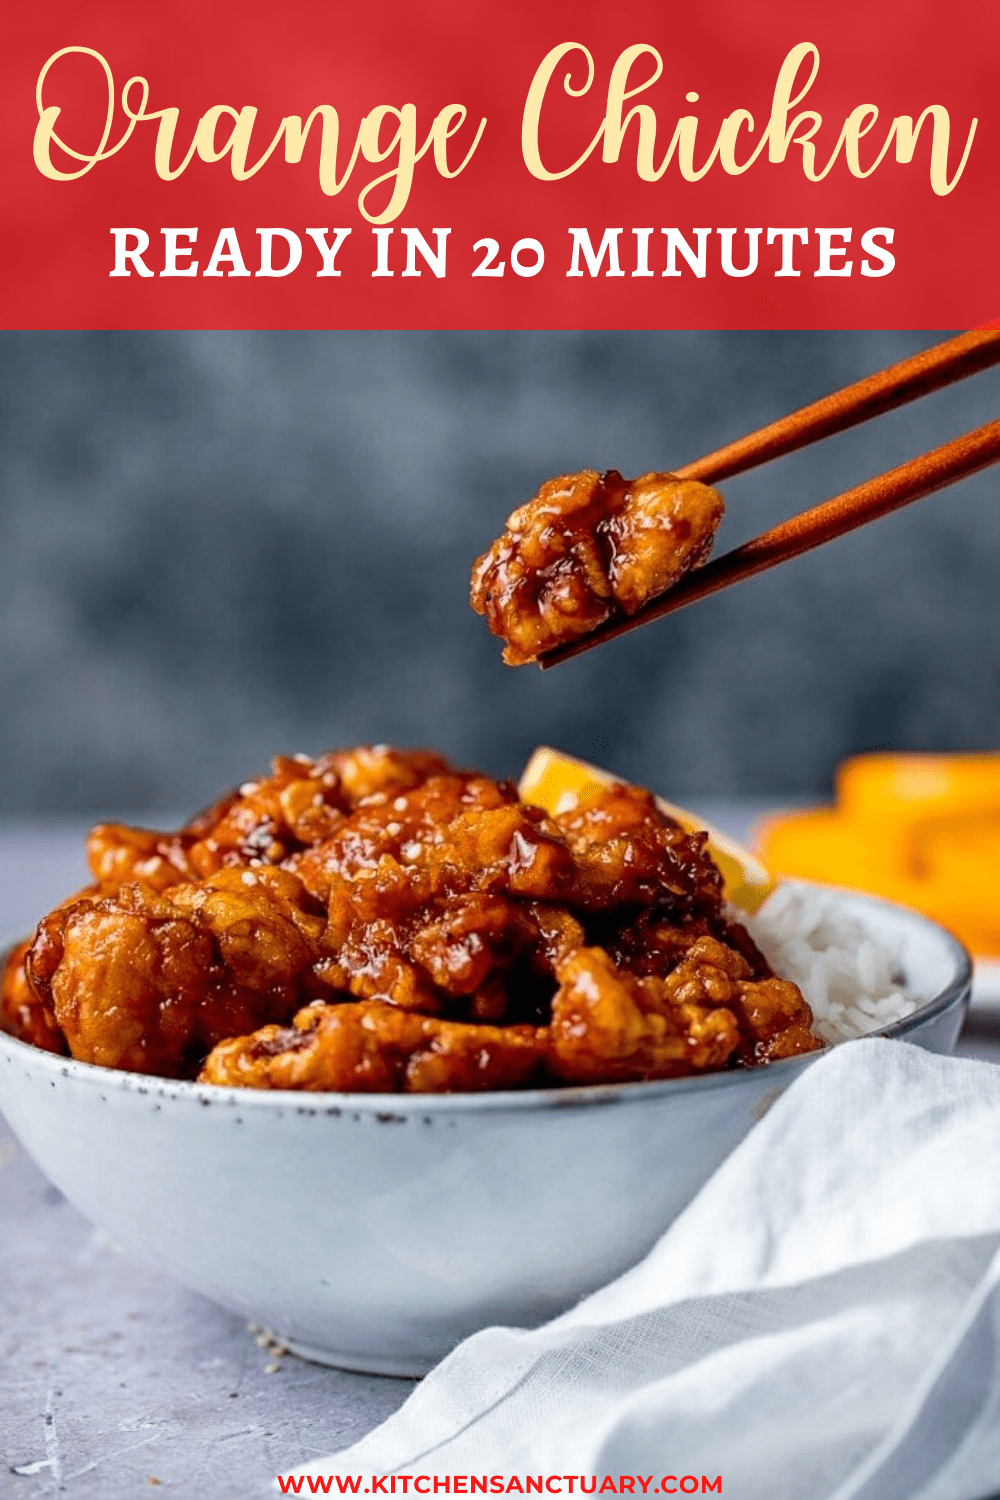 Orange Chicken Recipe - Ready in 20 Minutes! - Nicky's Kitchen Sanctuary